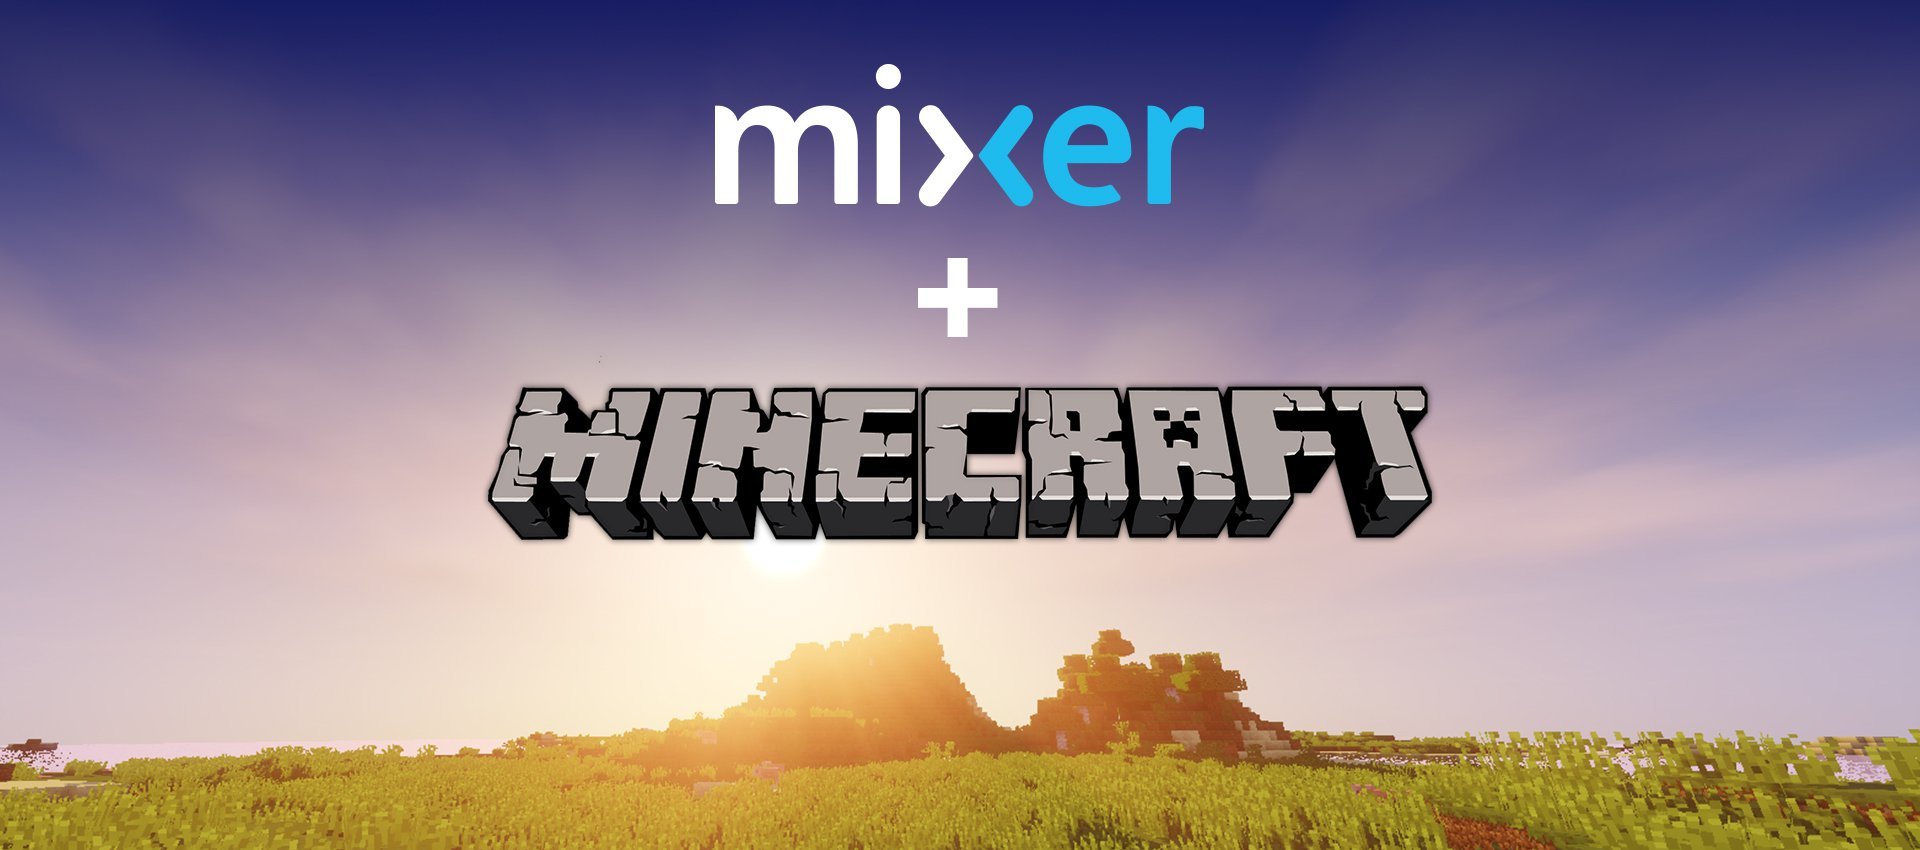 mixer-plus-minecraft.jpg